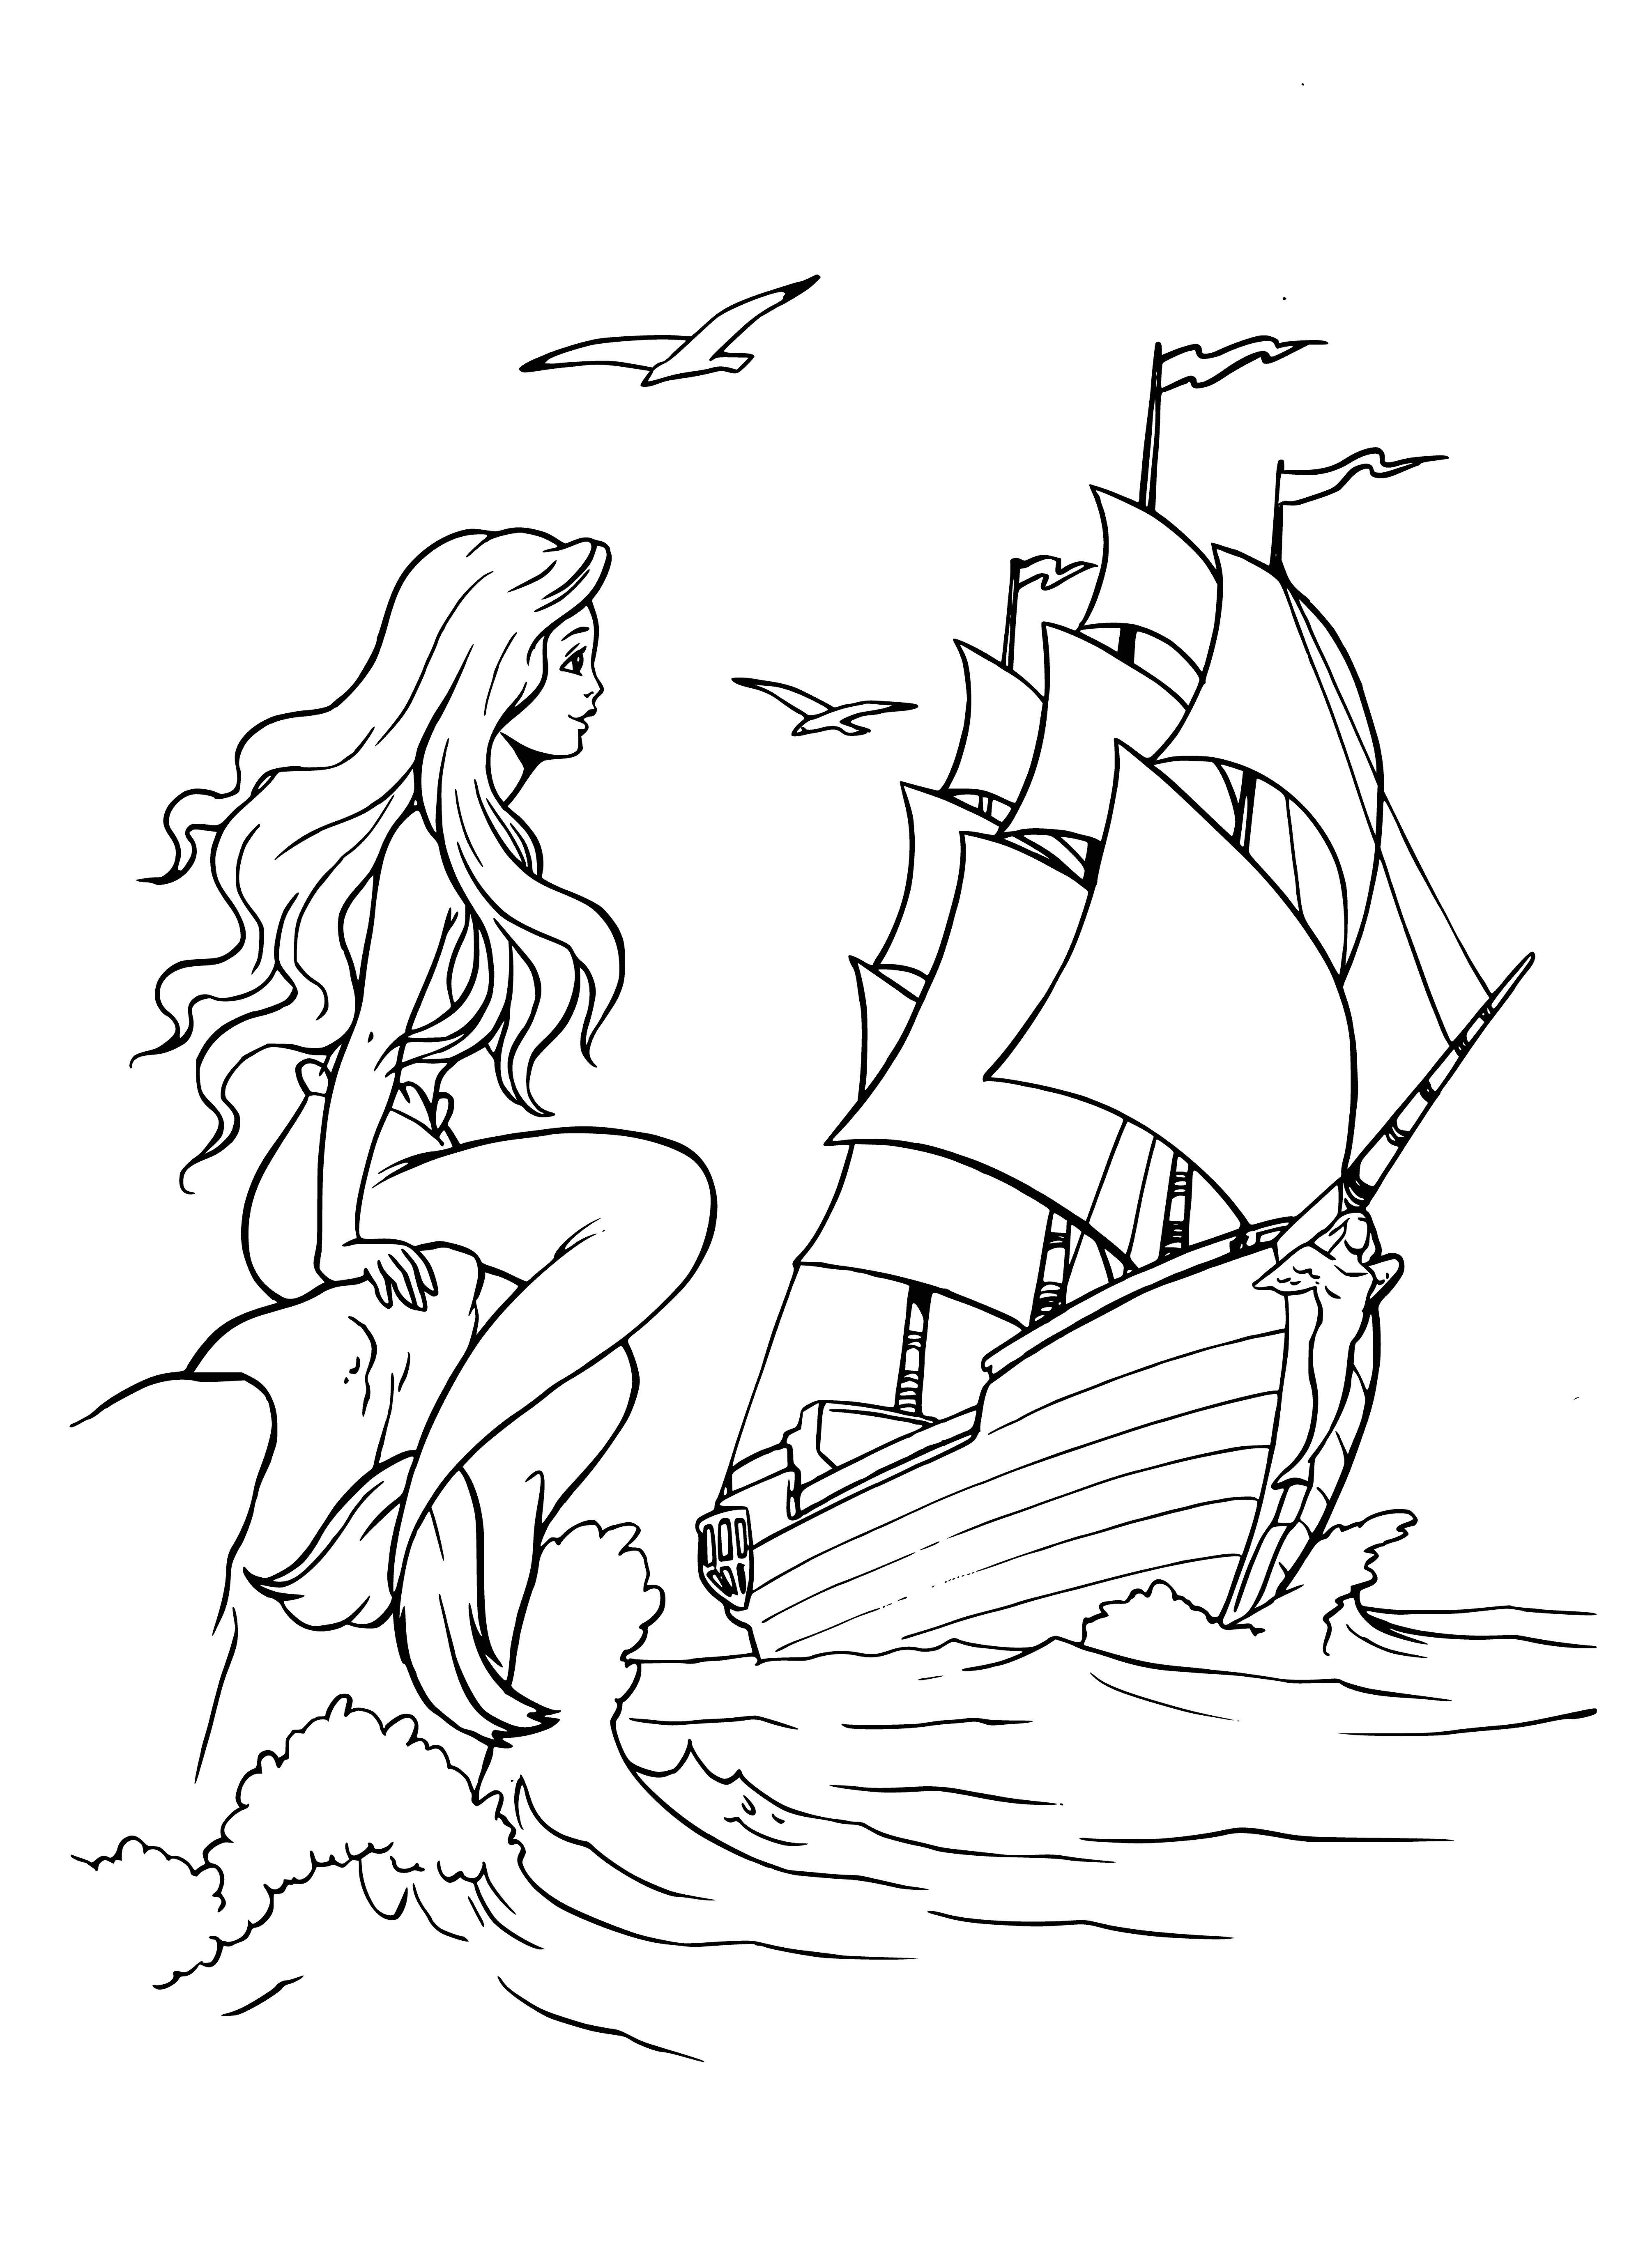 Mermaid and ship coloring page